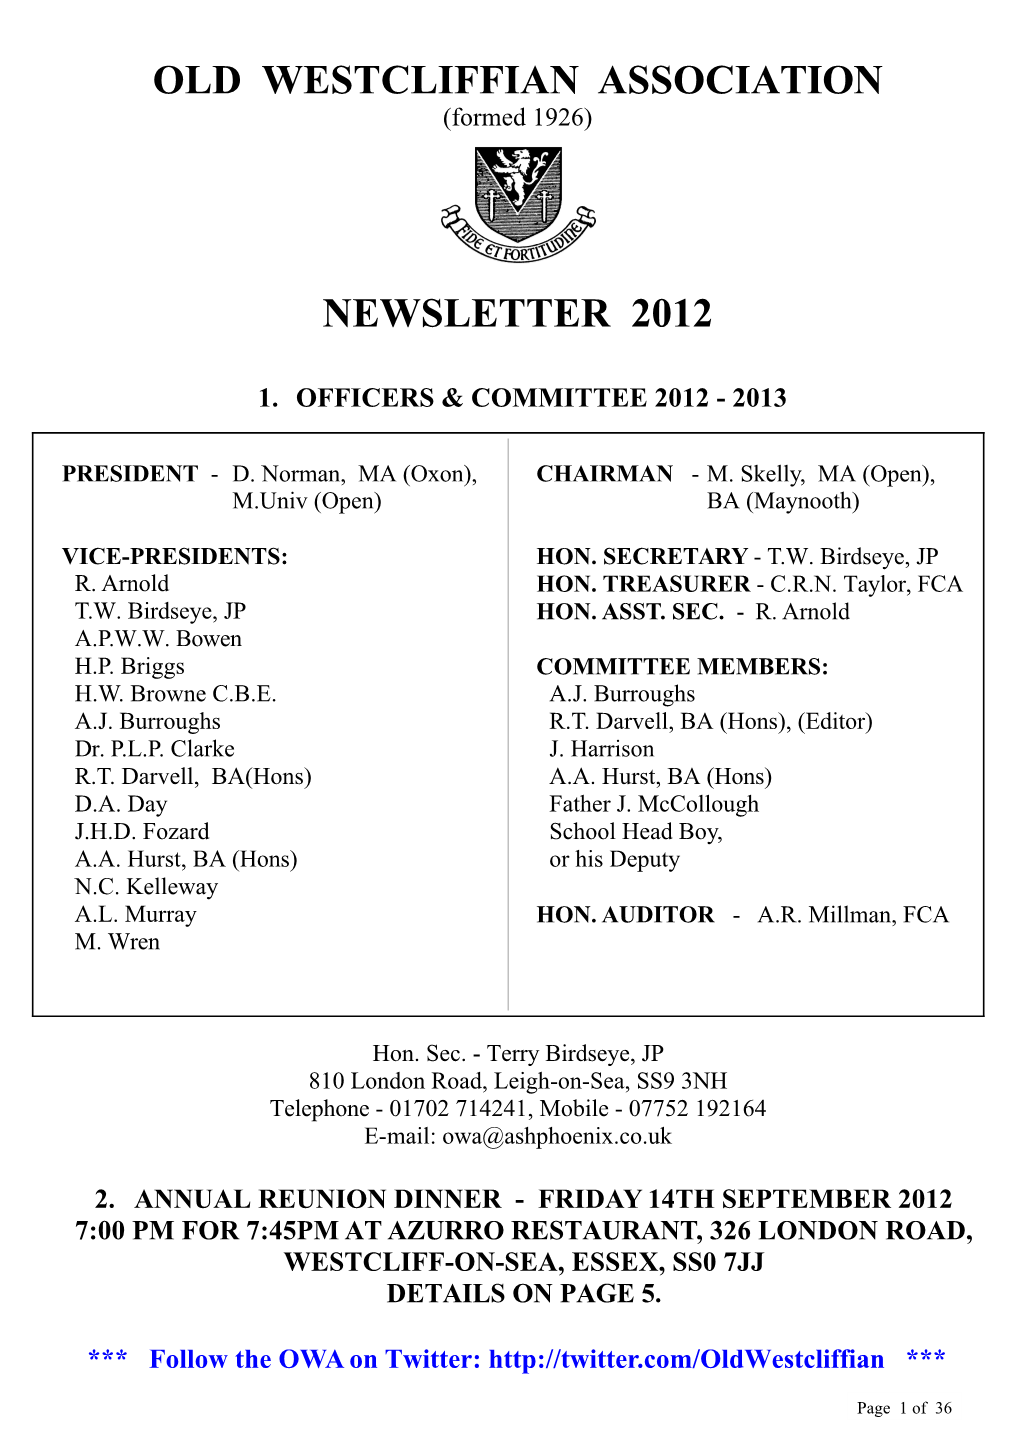 OWA Newsletter 2012 PDF File